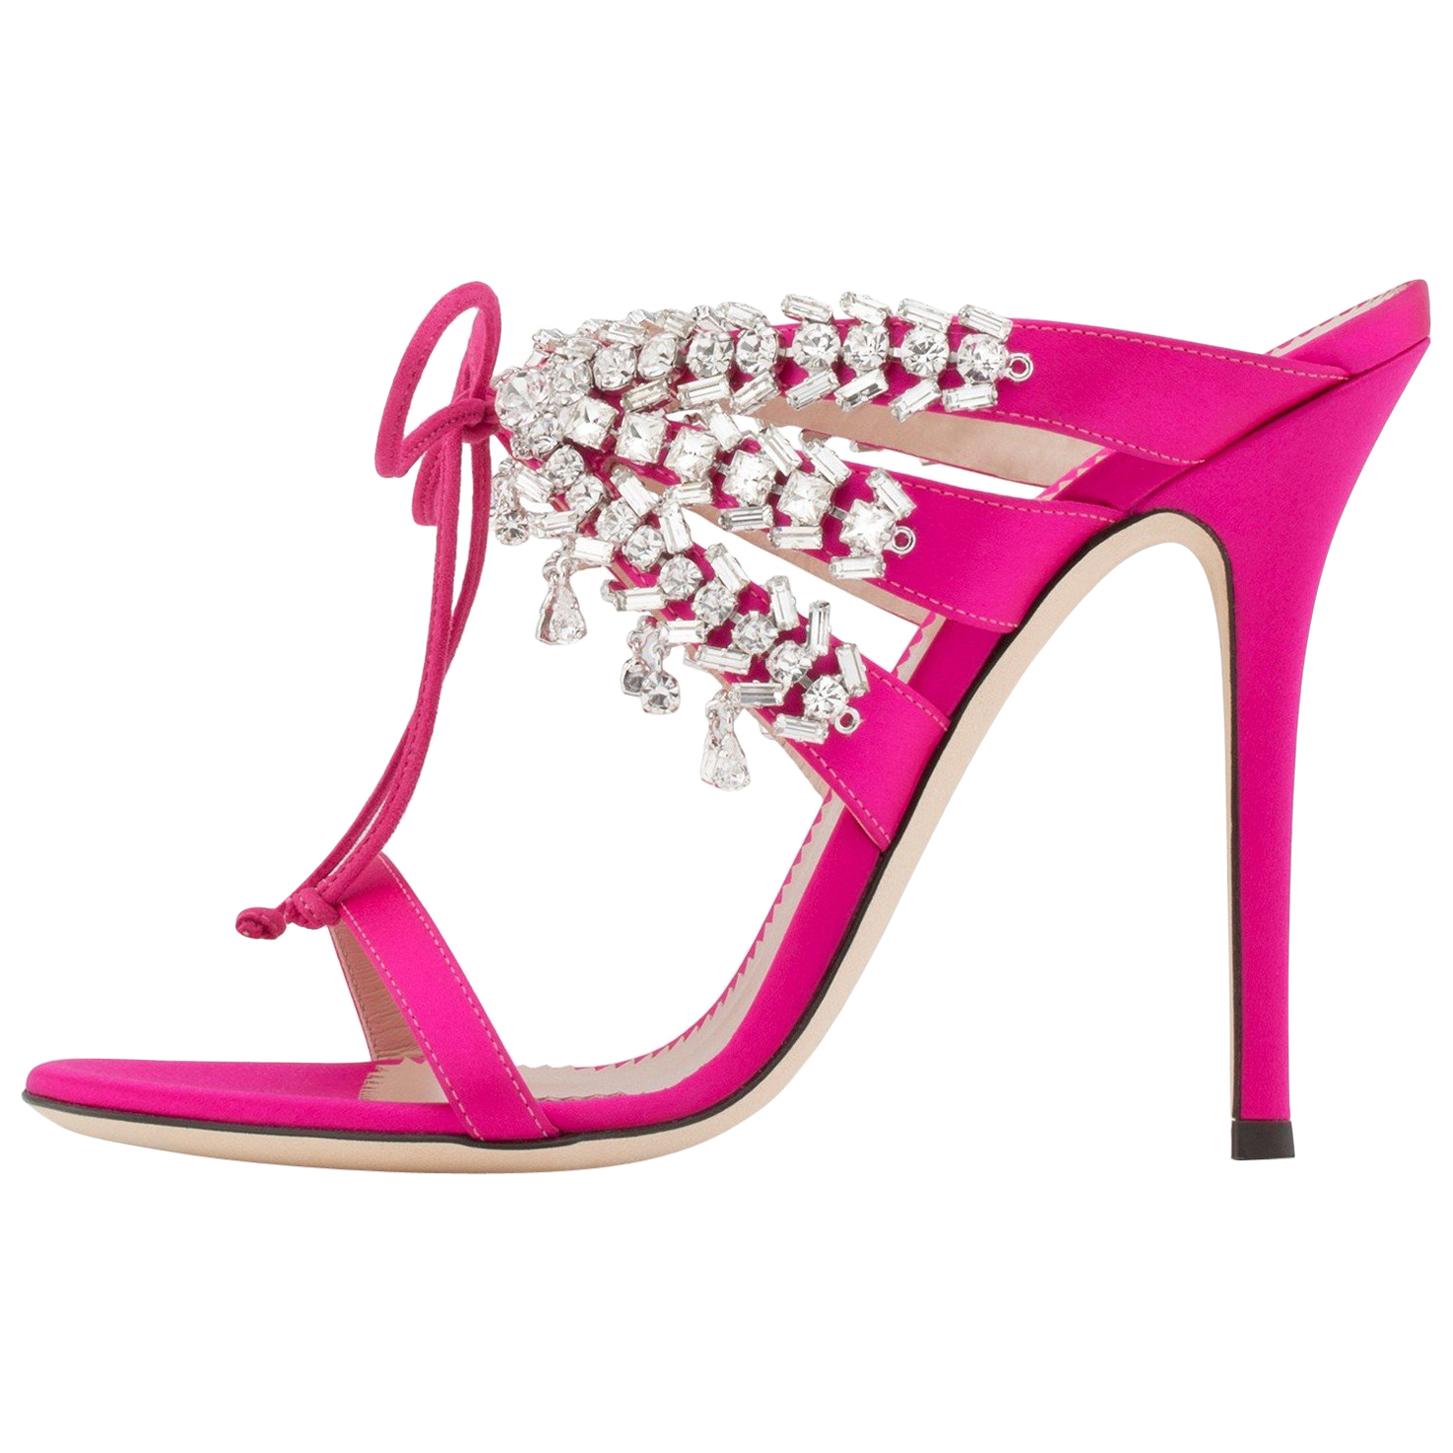 Buy > pink jeweled heels > in stock